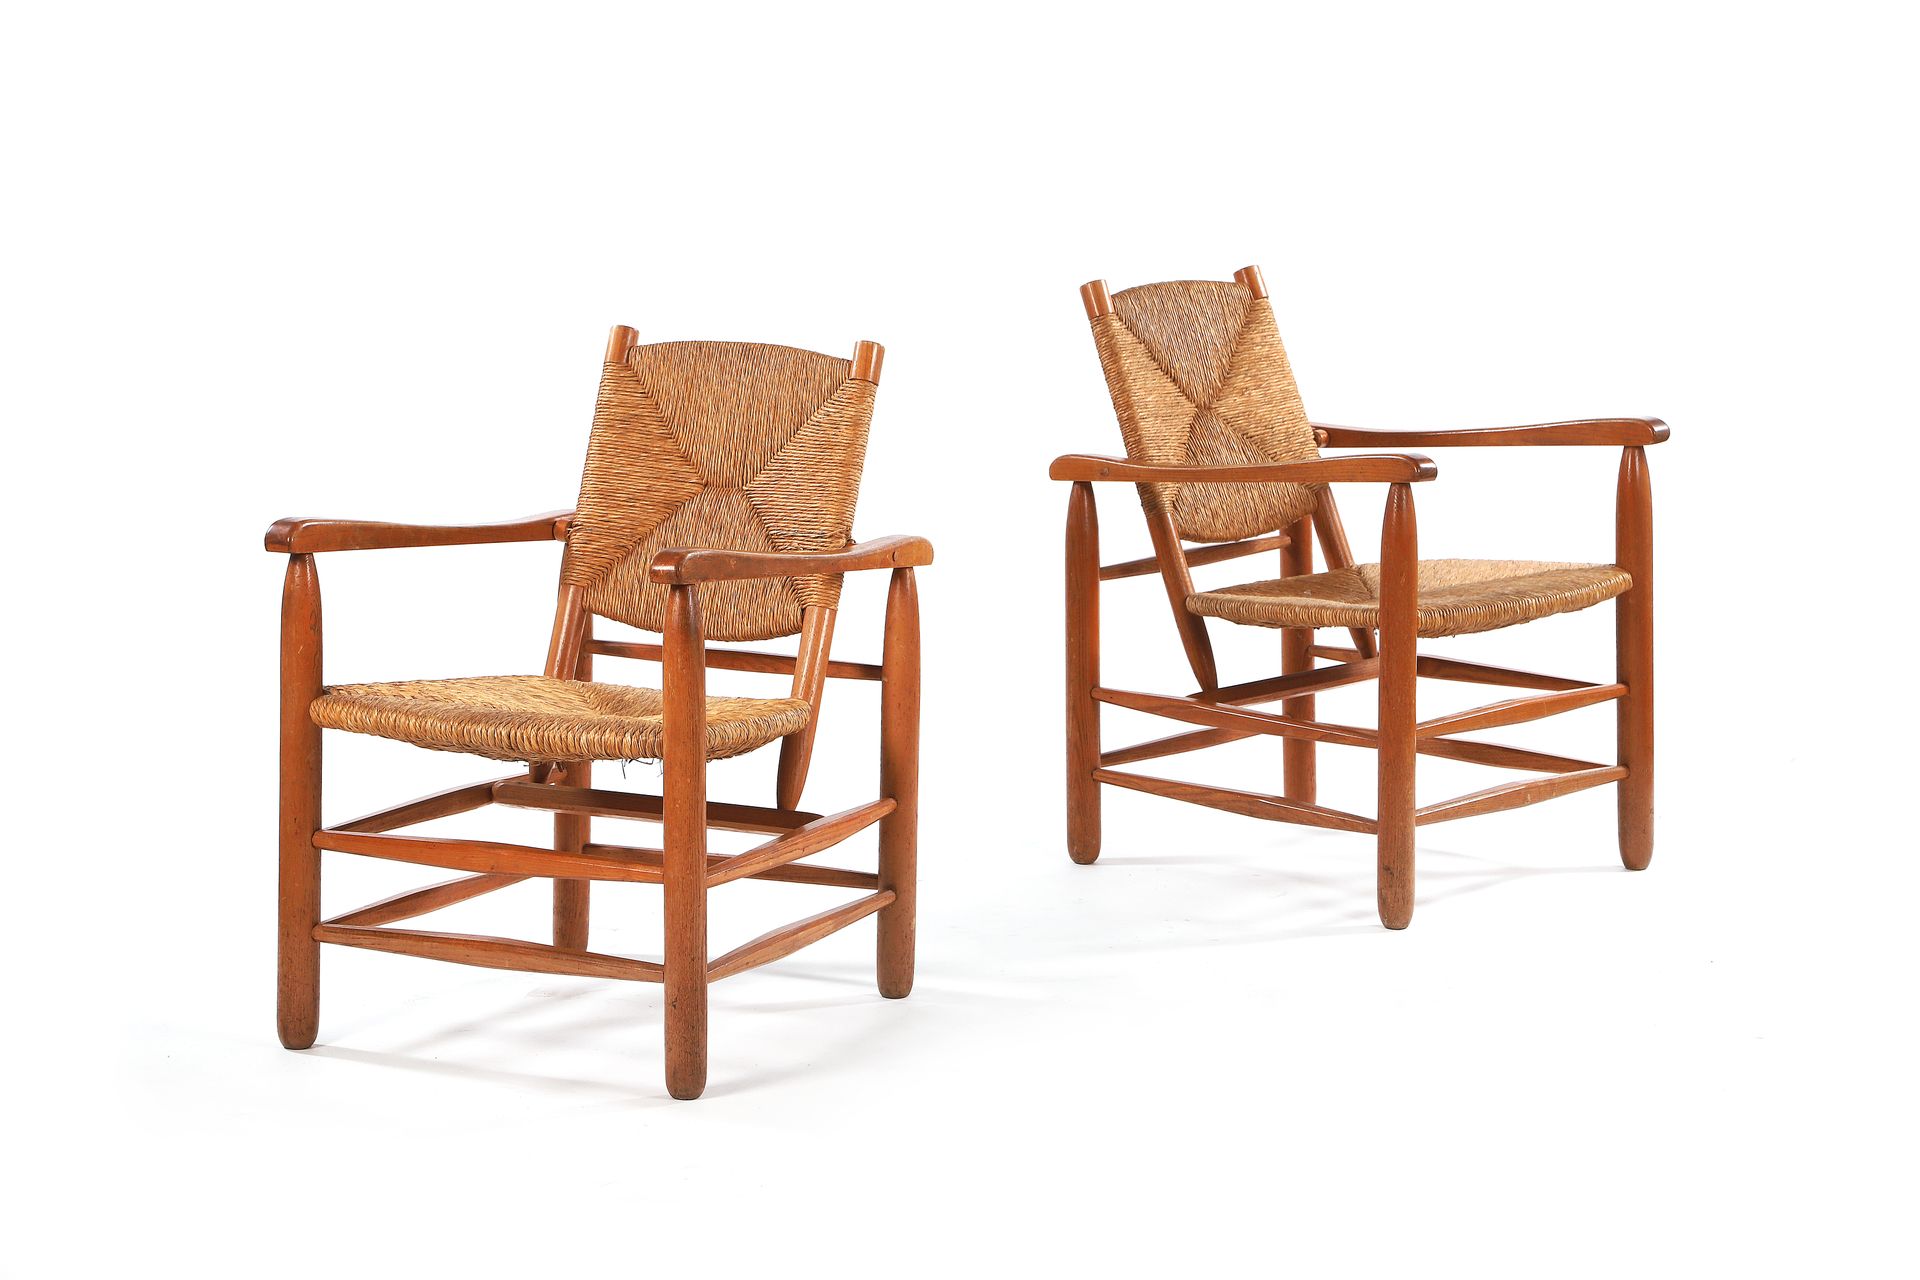 Null 夏洛特-佩里昂 (1903-1999)

一对扶手椅 n°21 橡木, 稻草 78 x 68 x 55 cm.BCB，约1960年

一对扶手椅 橡木&hellip;